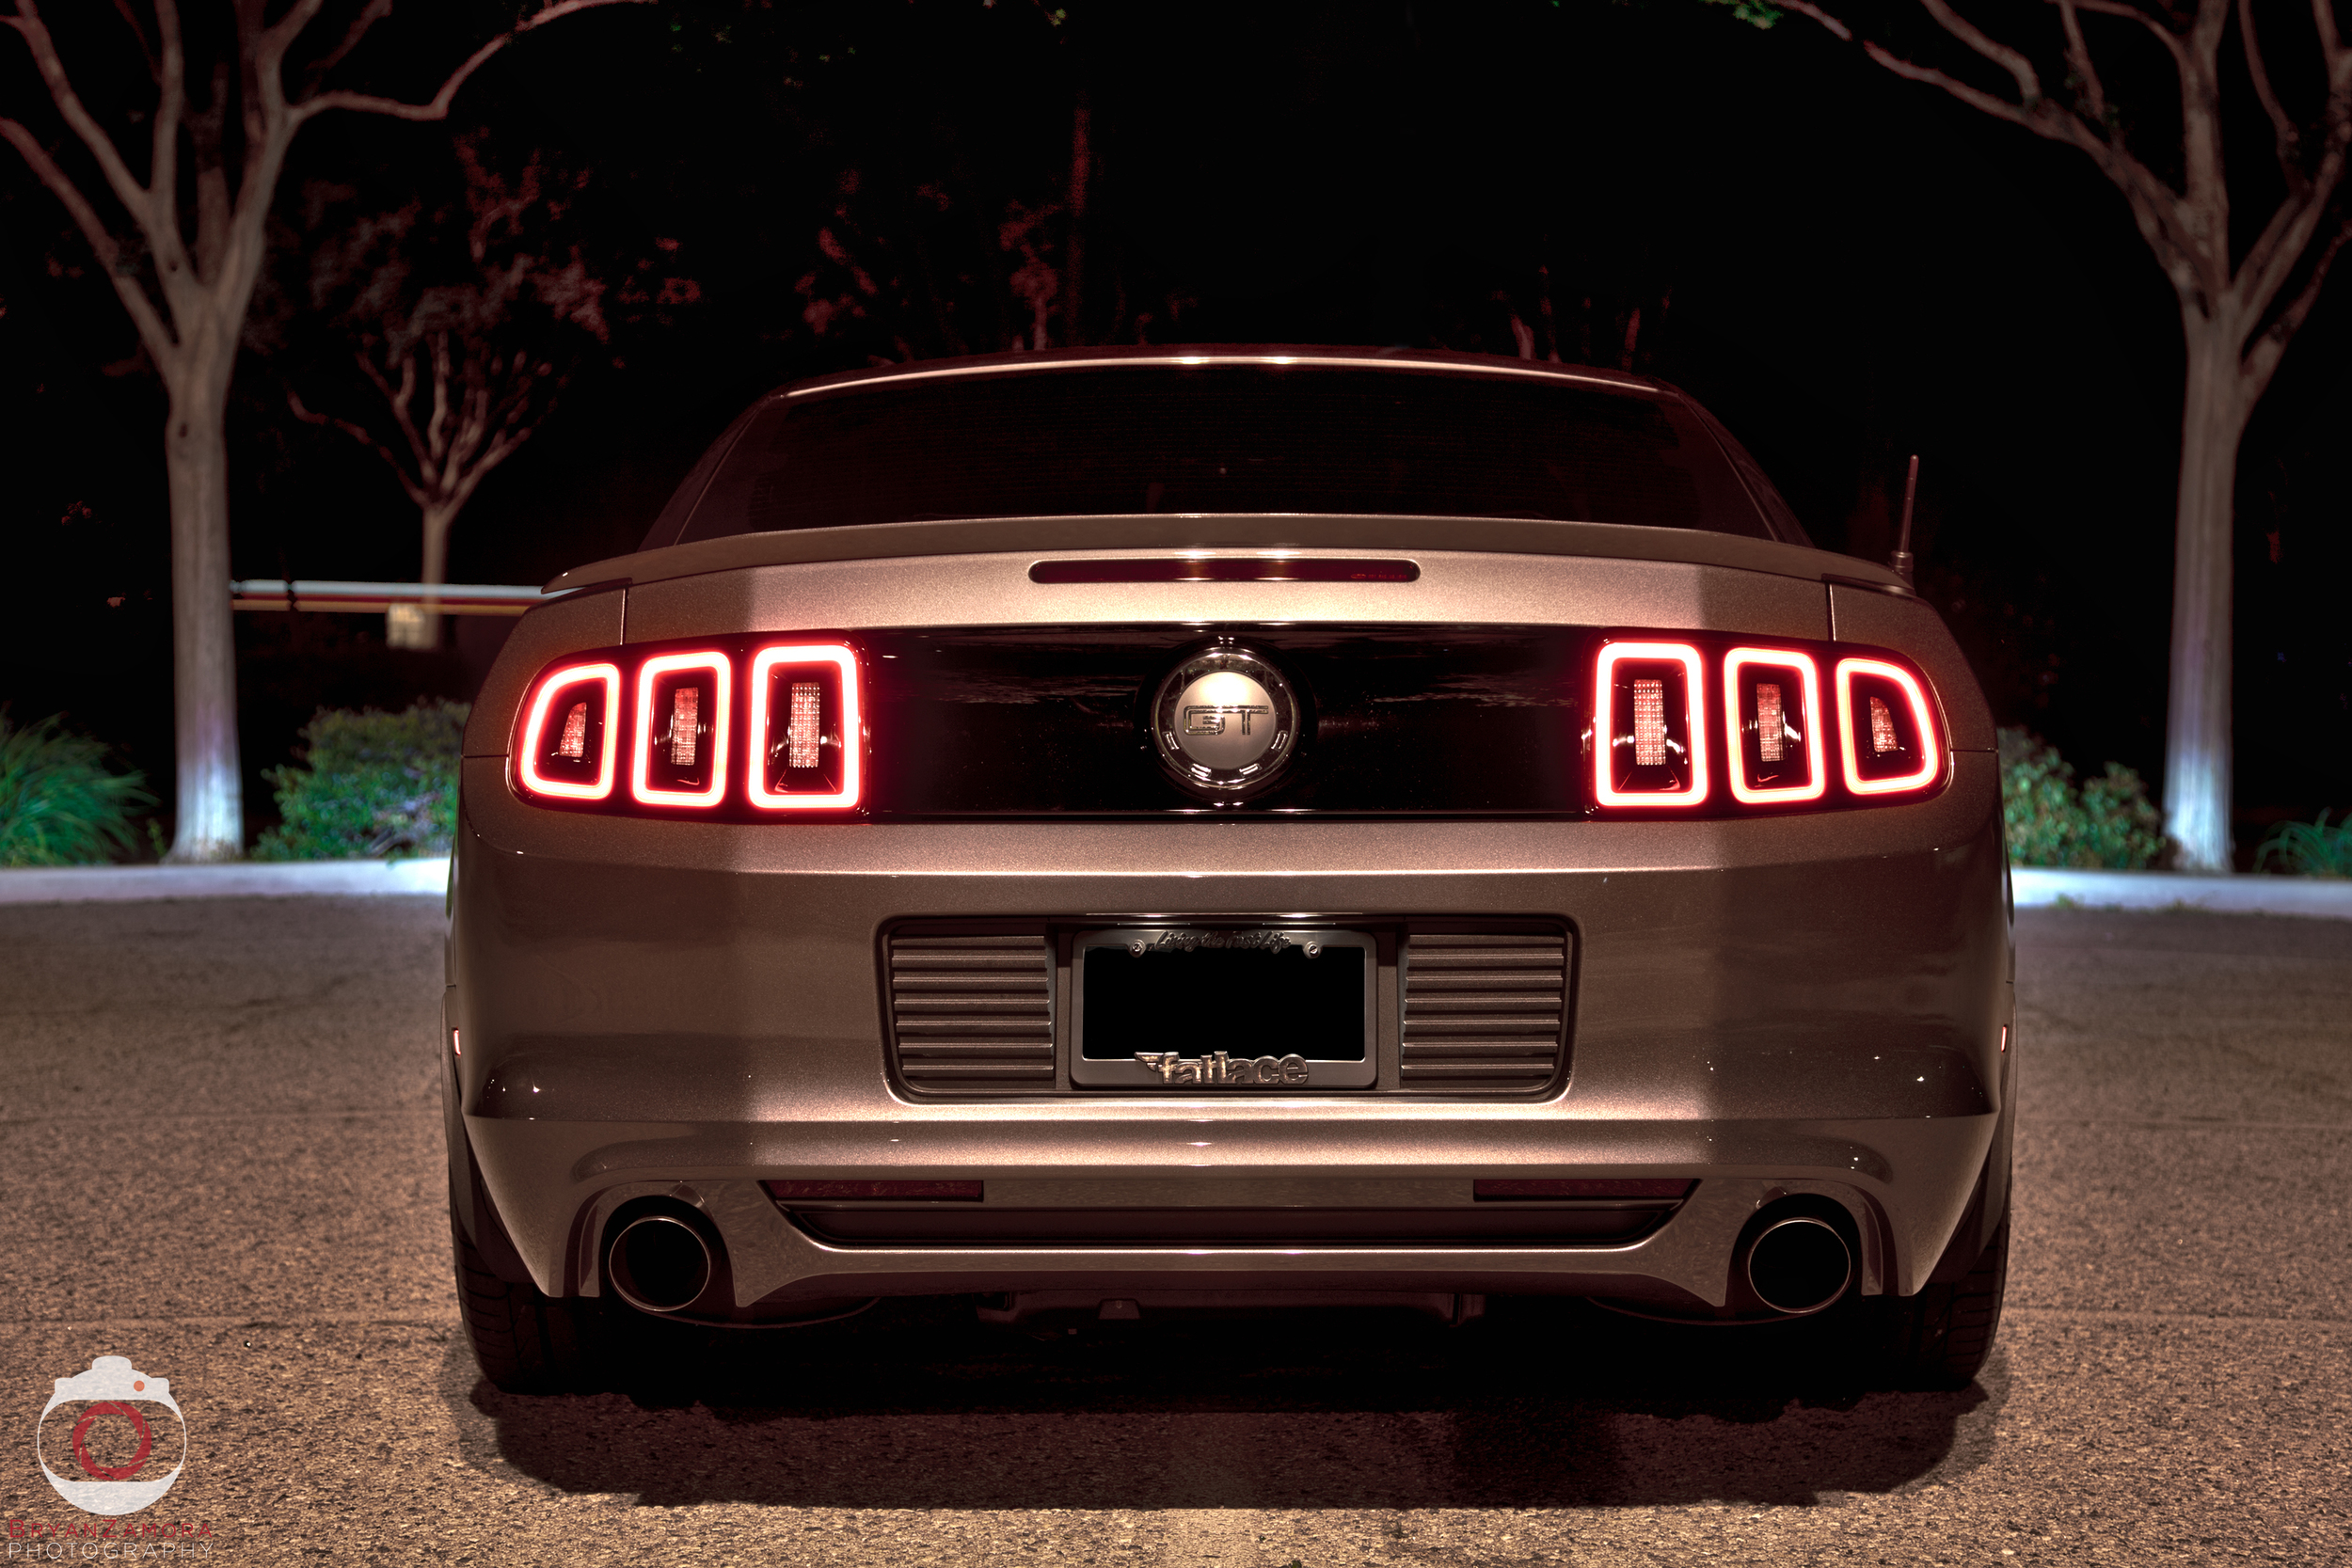 Mustang_HDR2.jpg